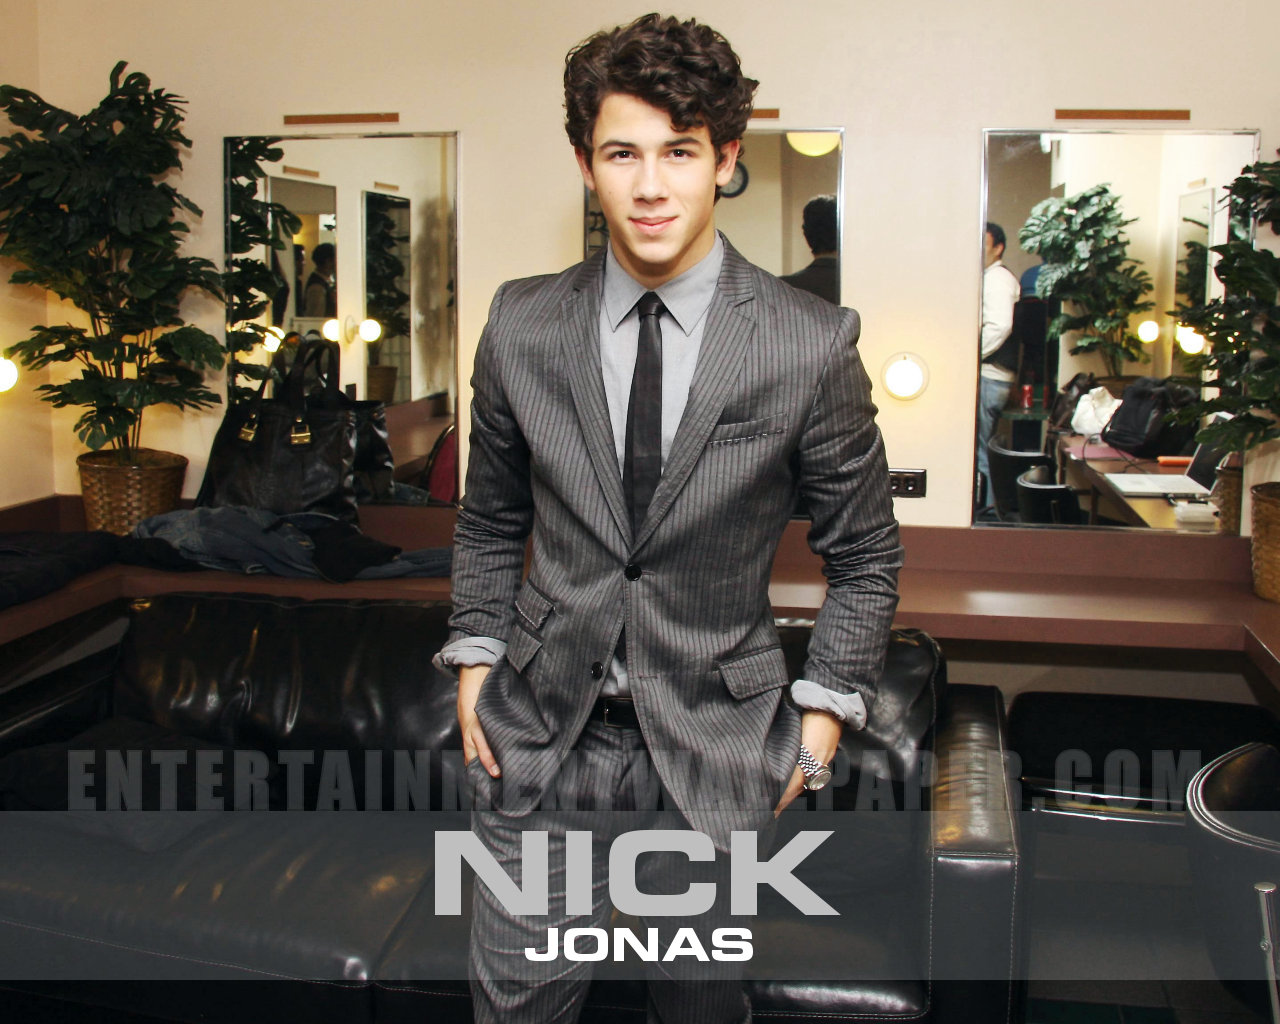 Nick Jonas Wallpaper High Resolution And Quality